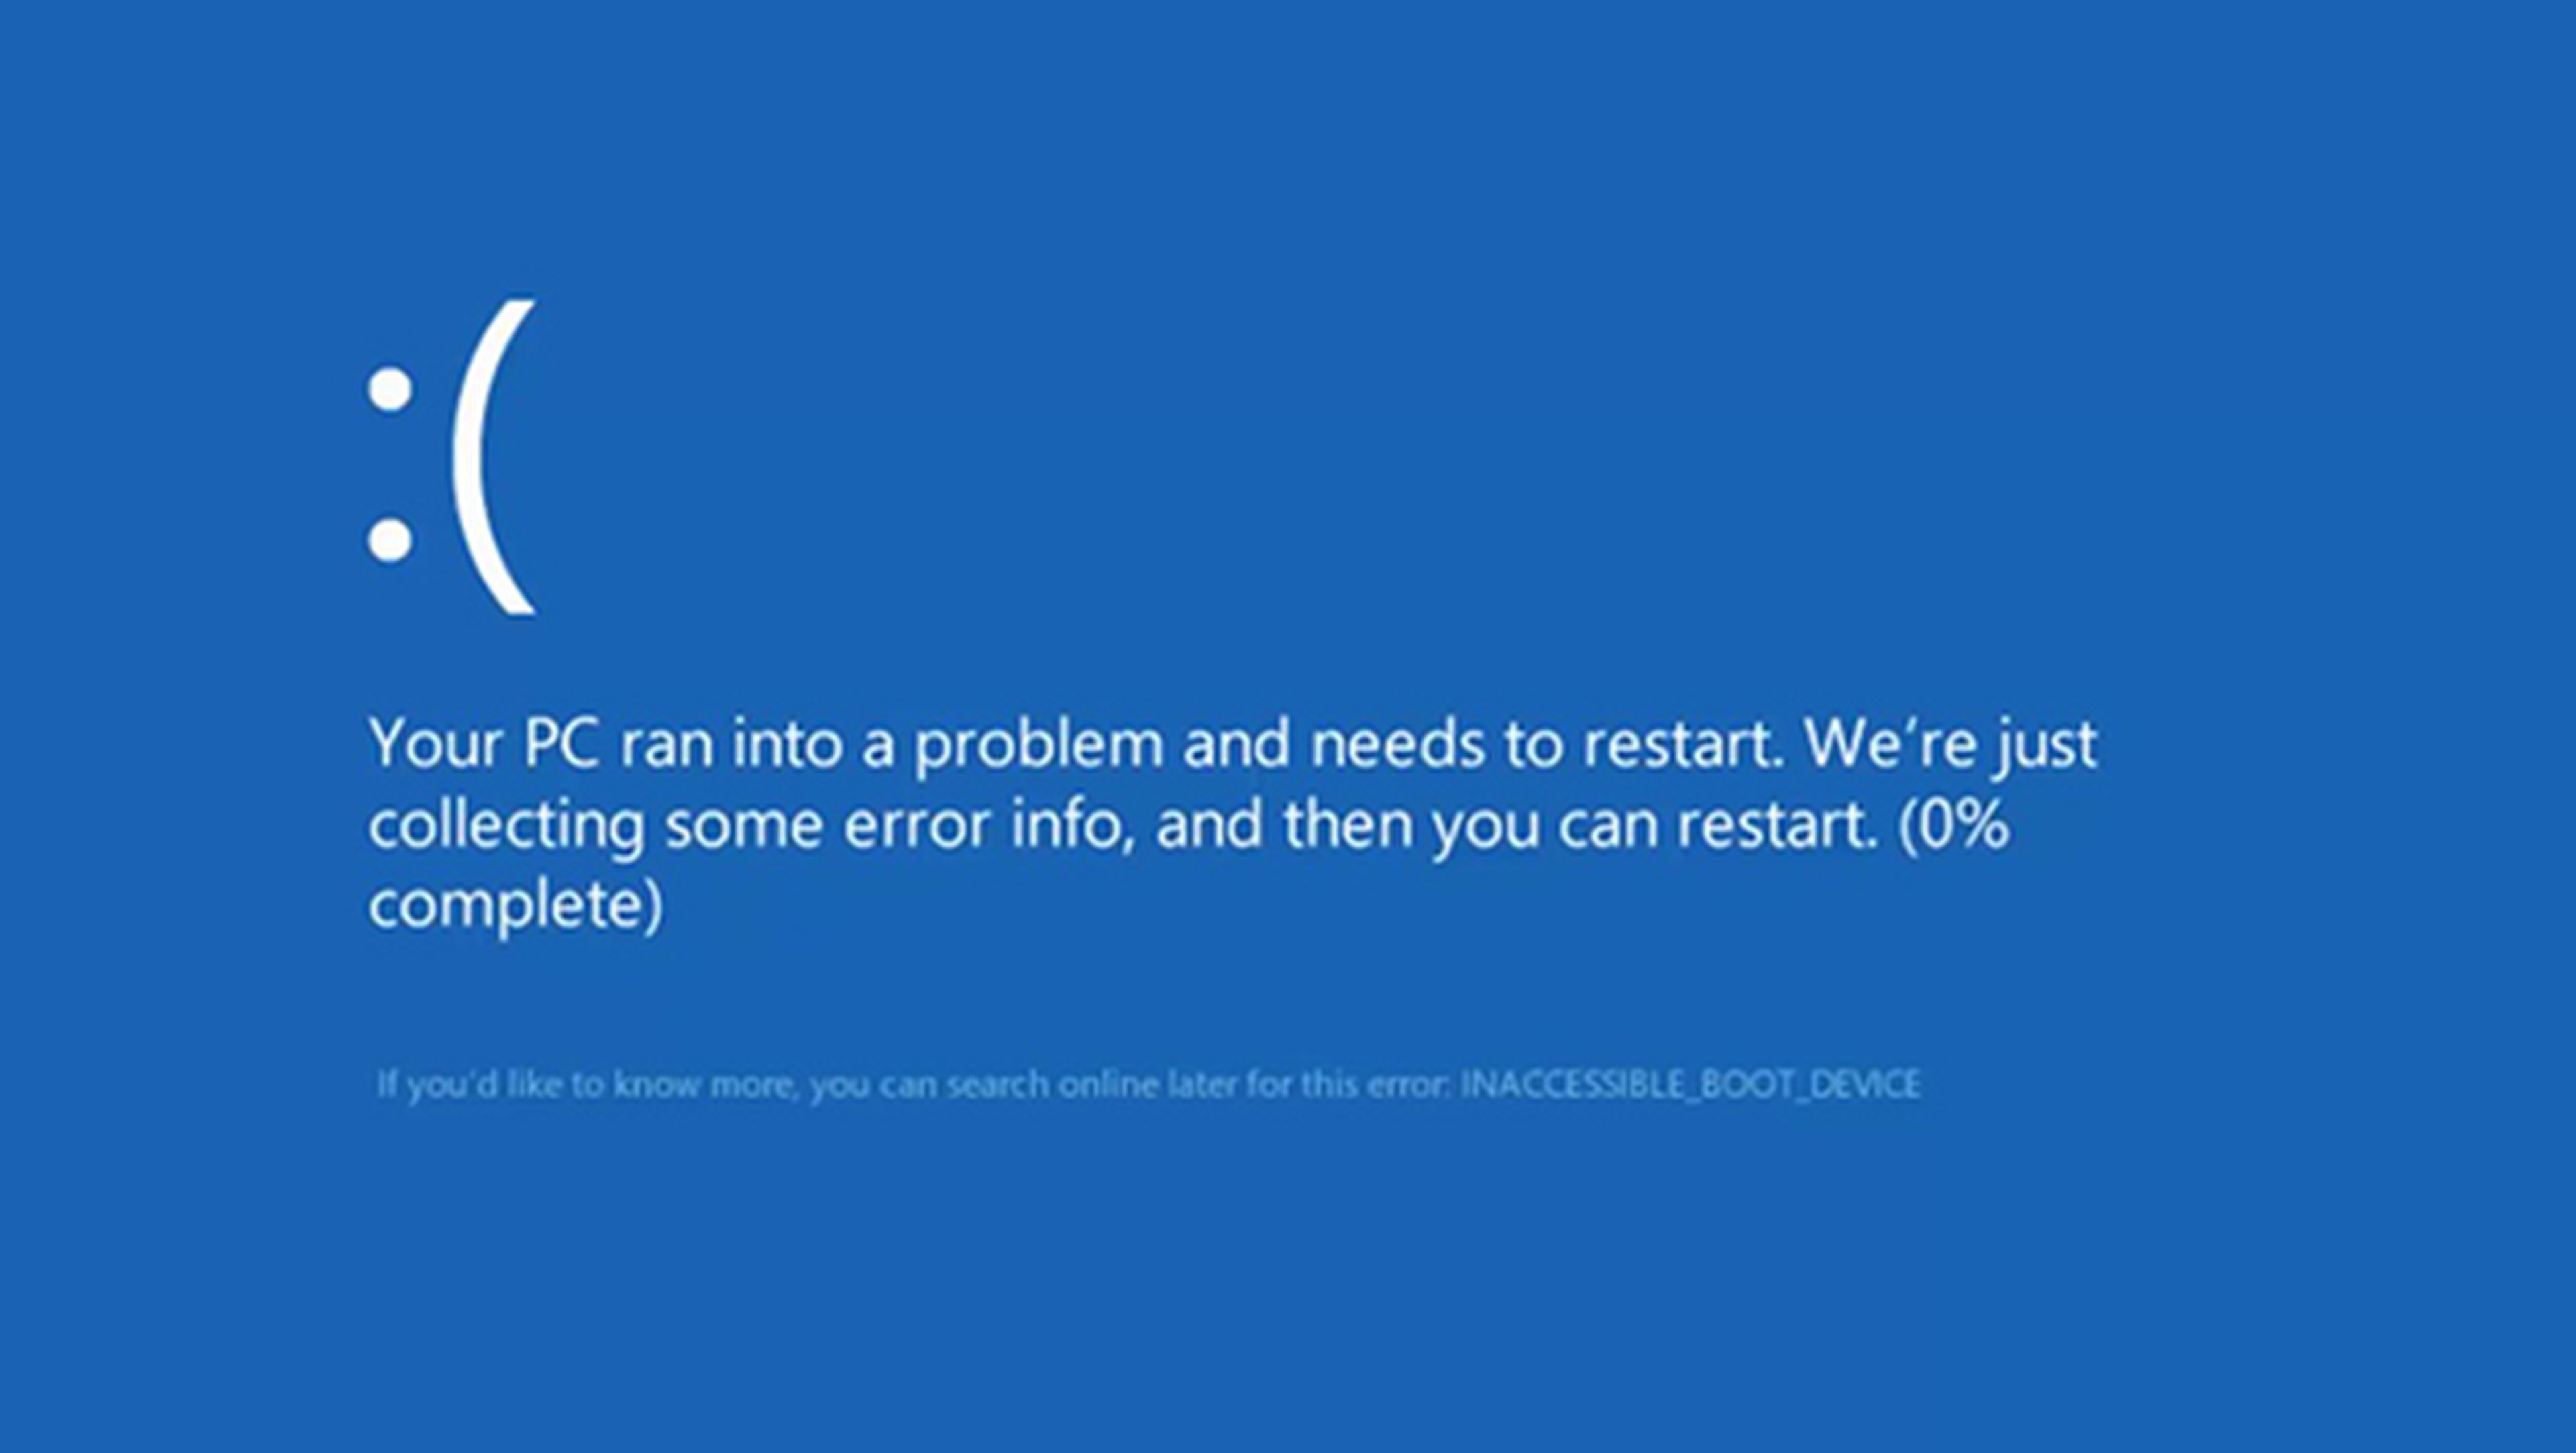 La actualización de seguridad de Windows provoca pantallazo azul si usas antivirus.